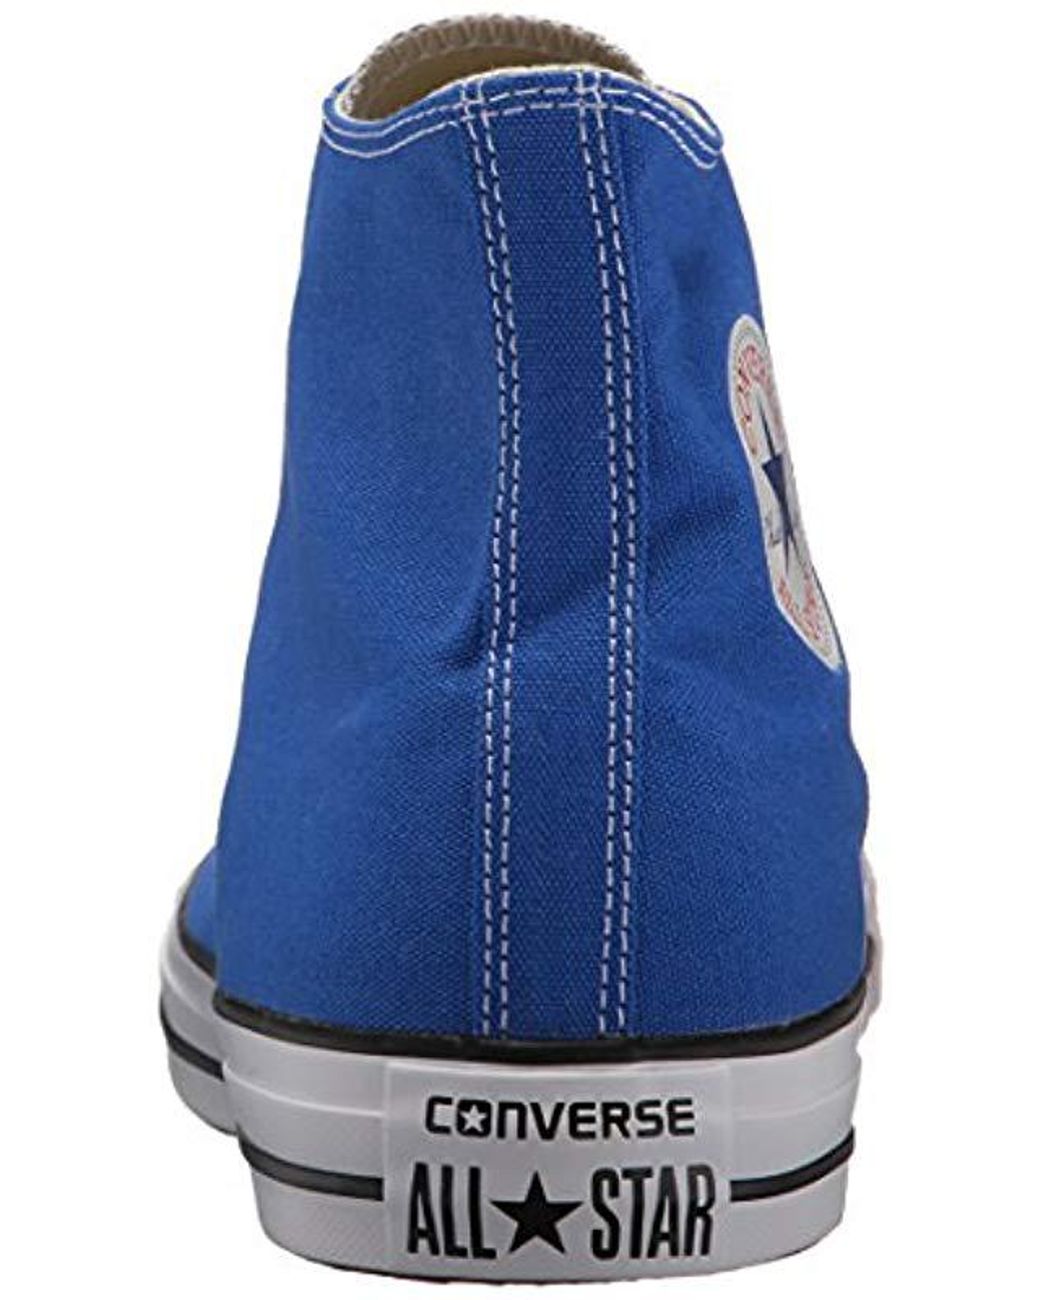 Converse Chuck Taylor All Star Seasonal Canvas High Top Sneaker, Hyper Royal,  10 Us /12 Us in Blue | Lyst